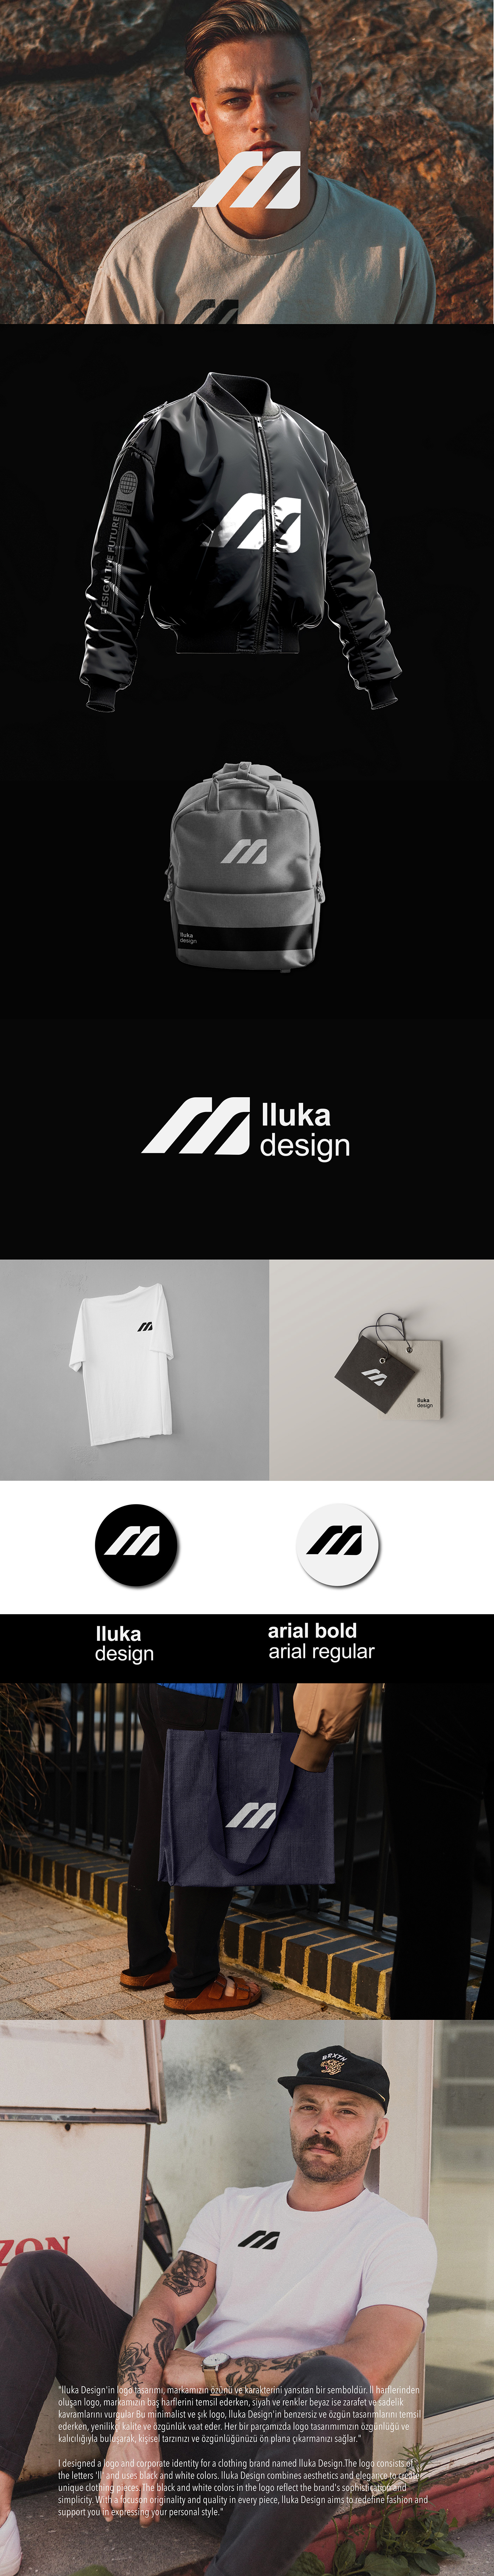 design Graphic Designer brand identity Logo Design adobe illustrator photoshop Illustrator adobe designer graphic